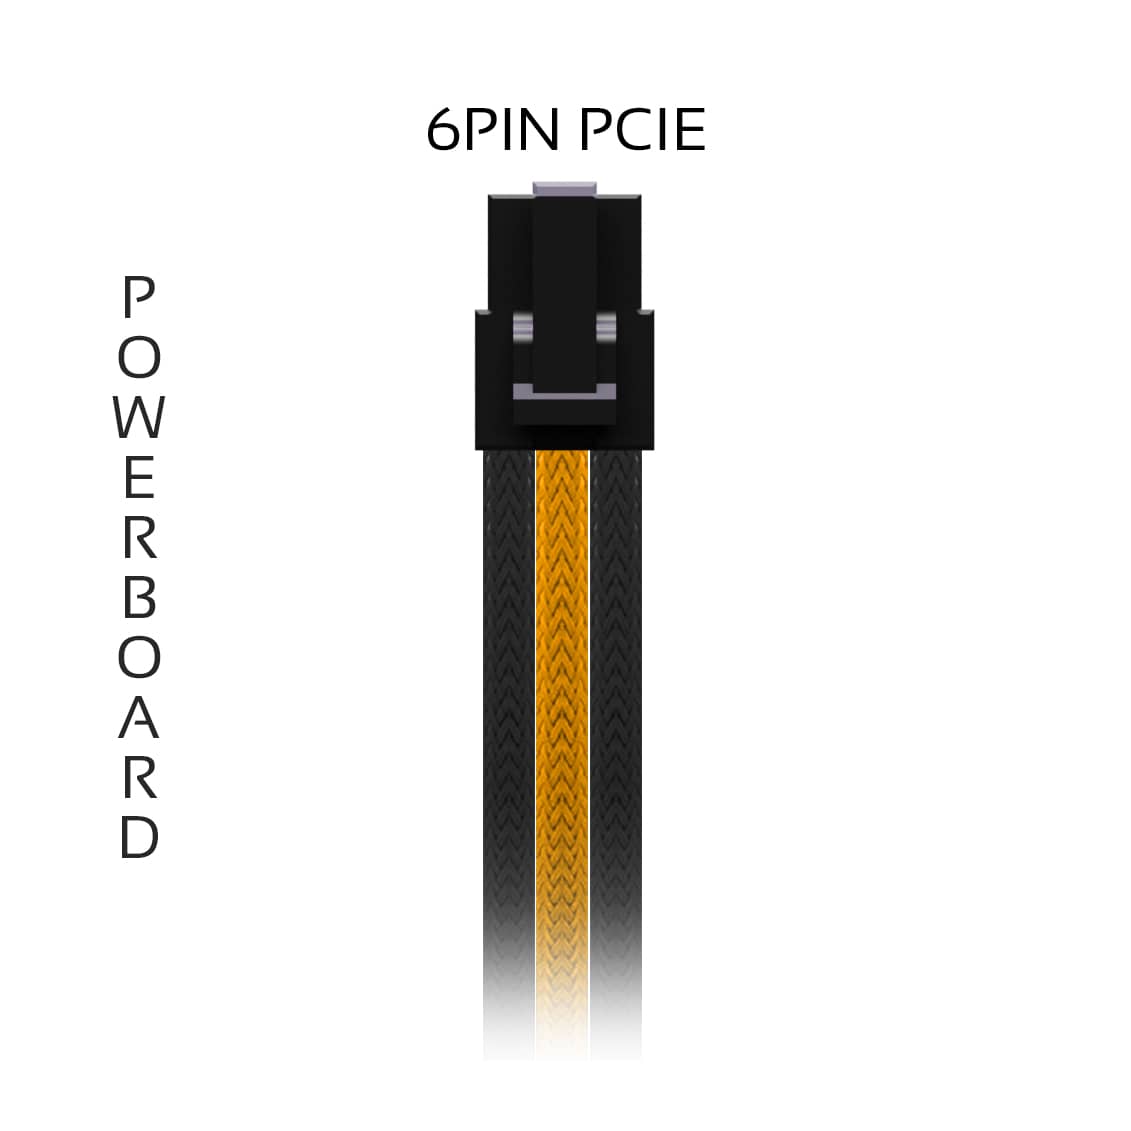 6pin-pcie-powerboard